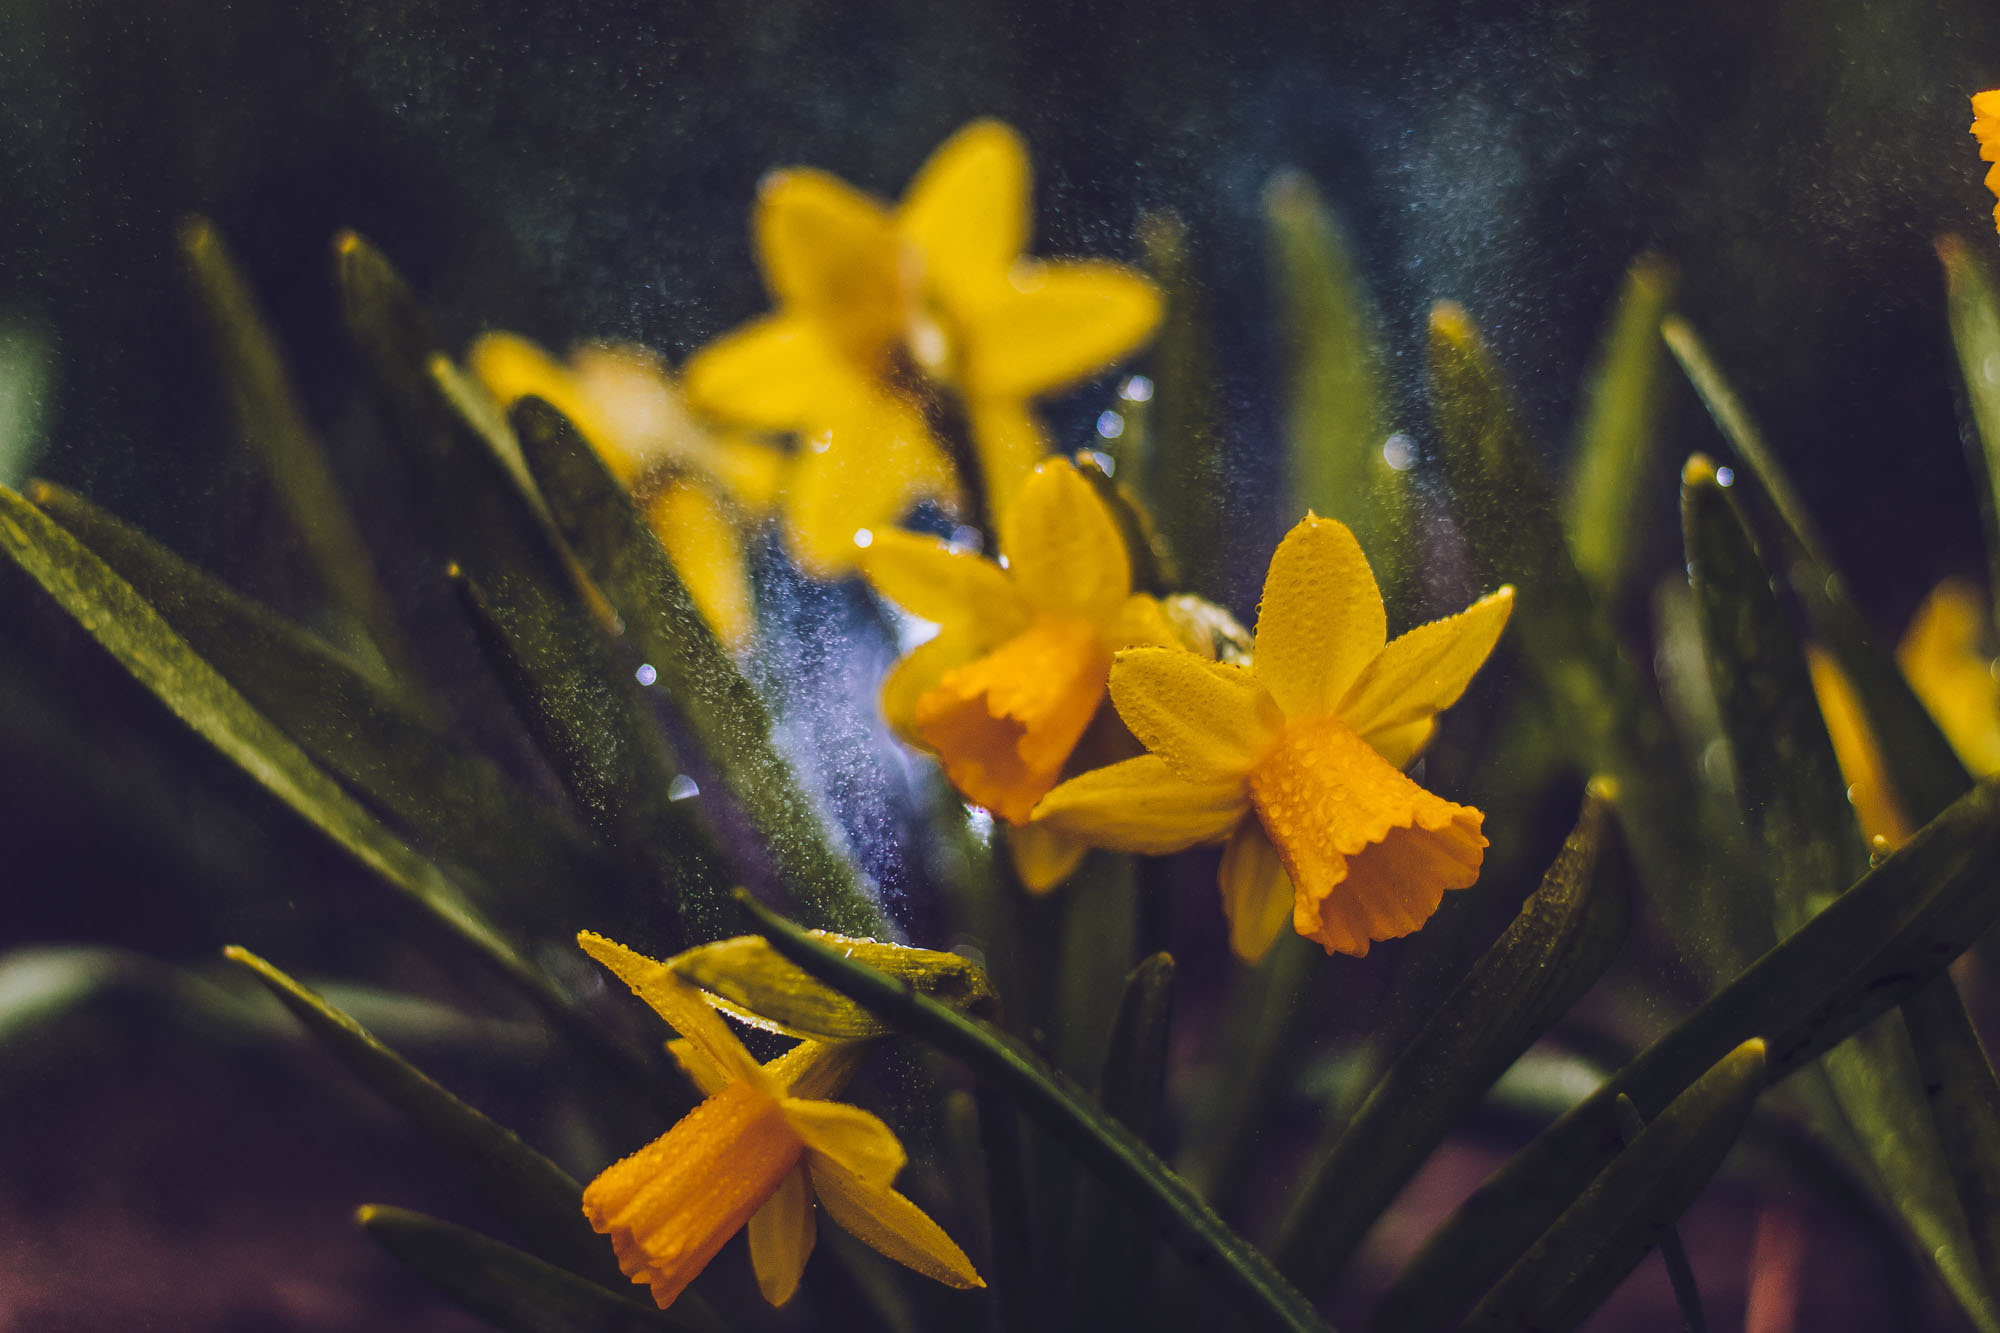 Tiny daffodils